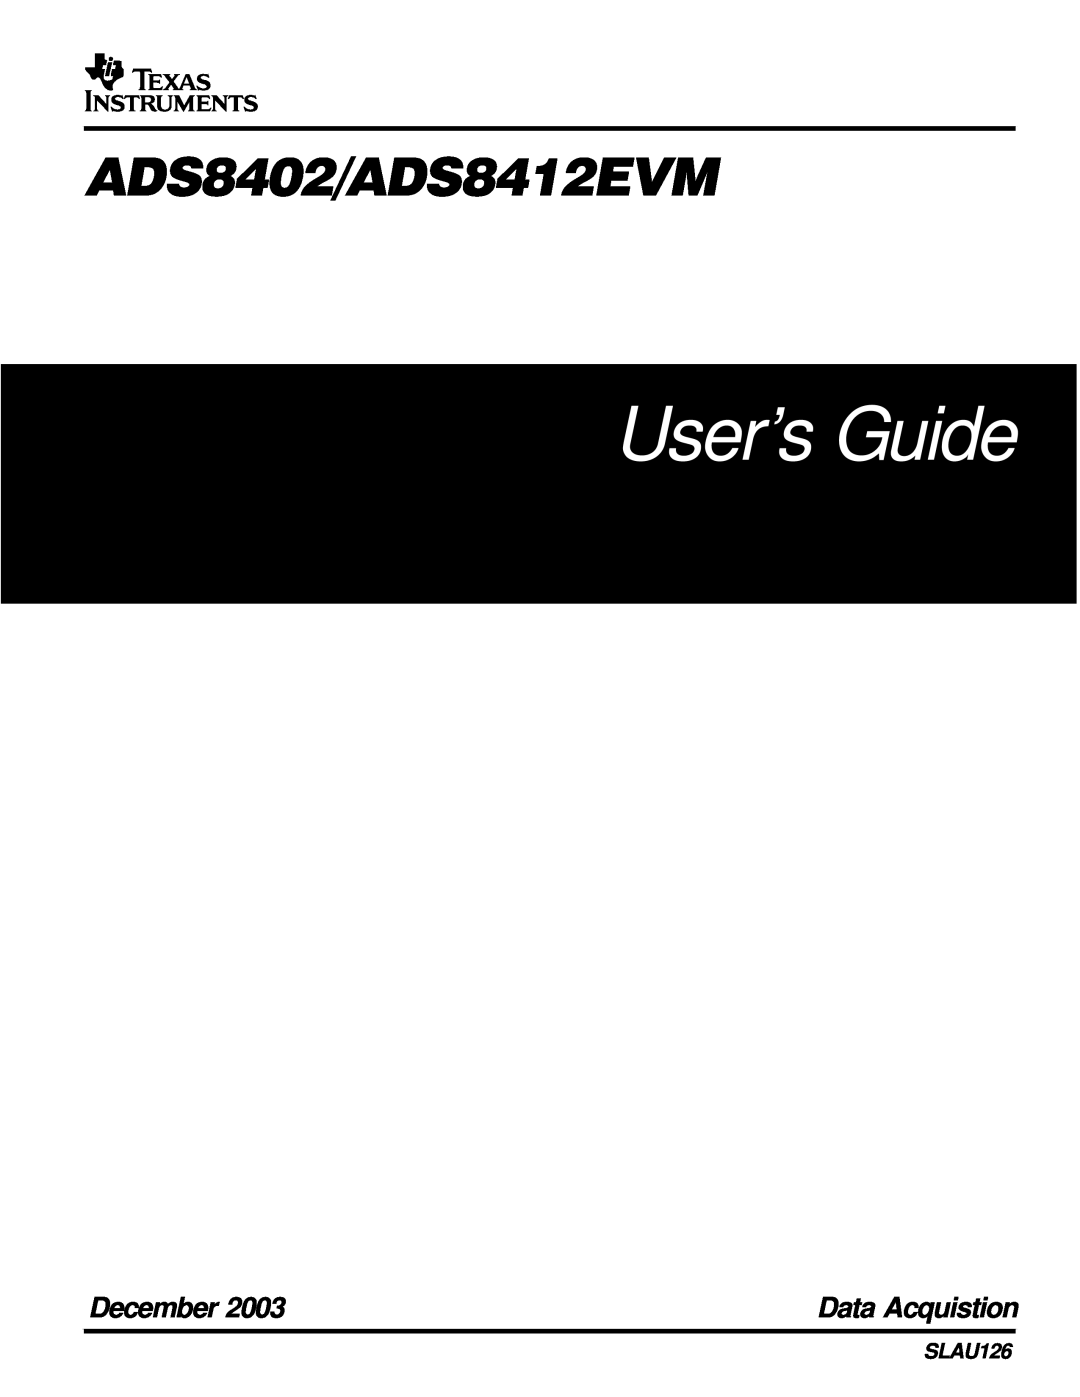 Texas Instruments ADS8402 EVM, ADS8412 EVM manual User’s Guide, ADS8402/ADS8412EVM, December, Data Acquistion, SLAU126 